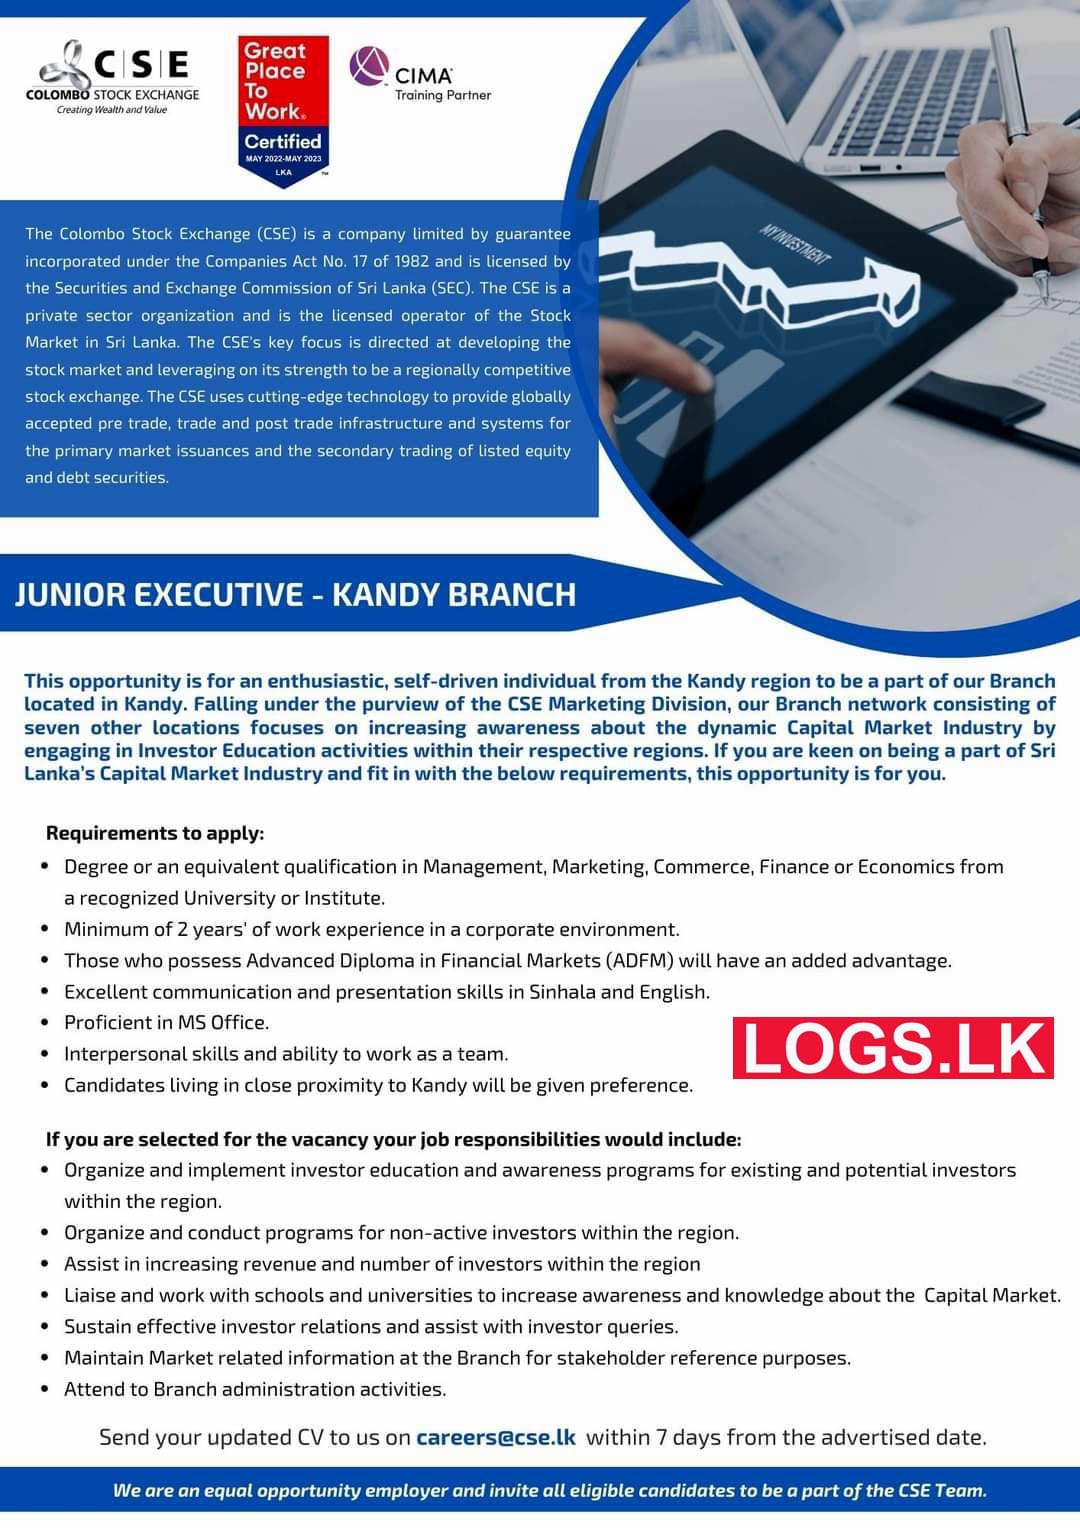 Junior Executive - Colombo Stock Exchange Vacancies 2023 in Kandy